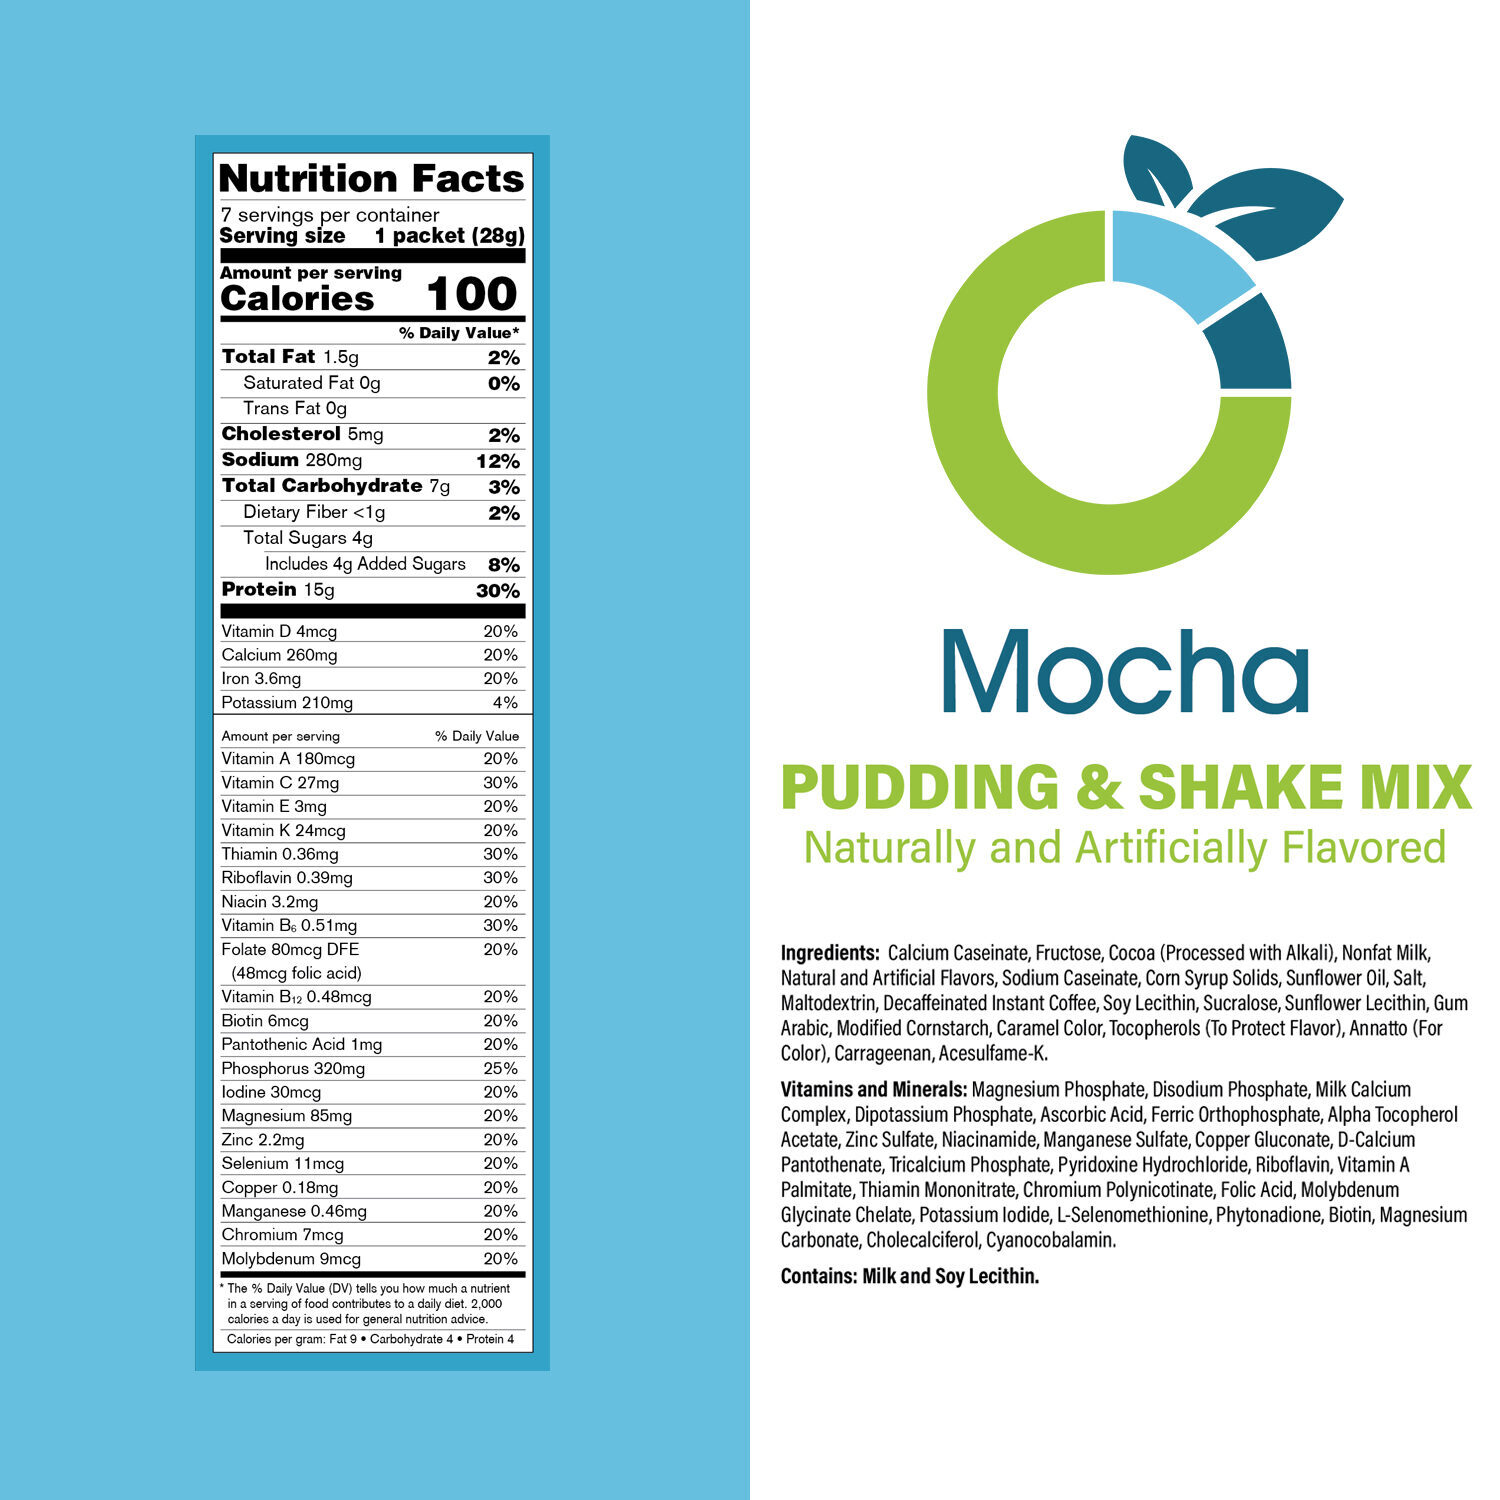 Mocha-Pudding-Shake-Mix-Panel_05dc05dc0_78730